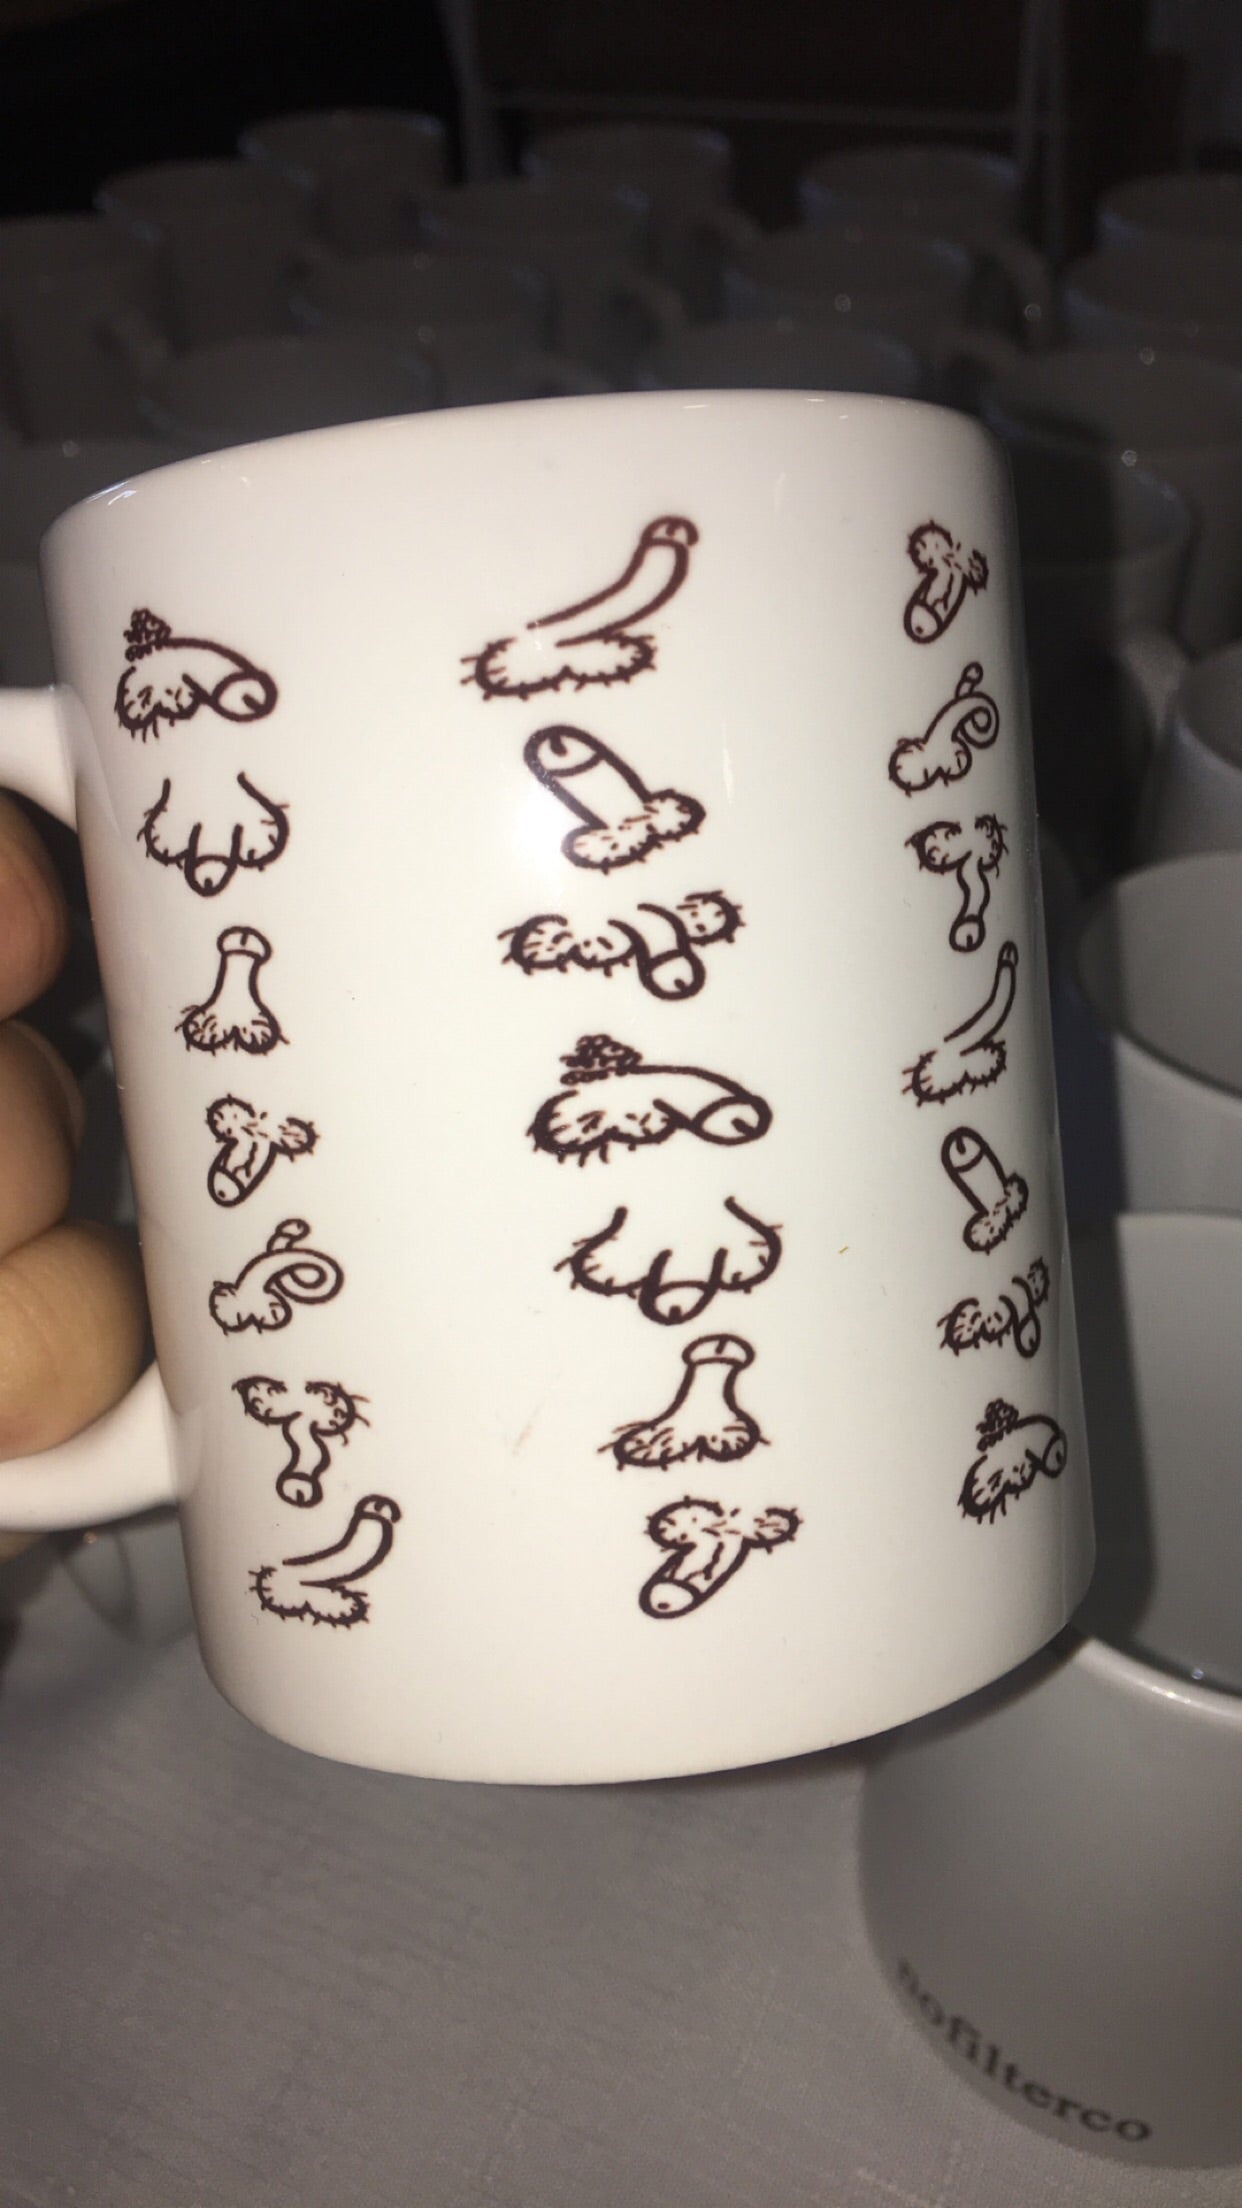 Many penis mug